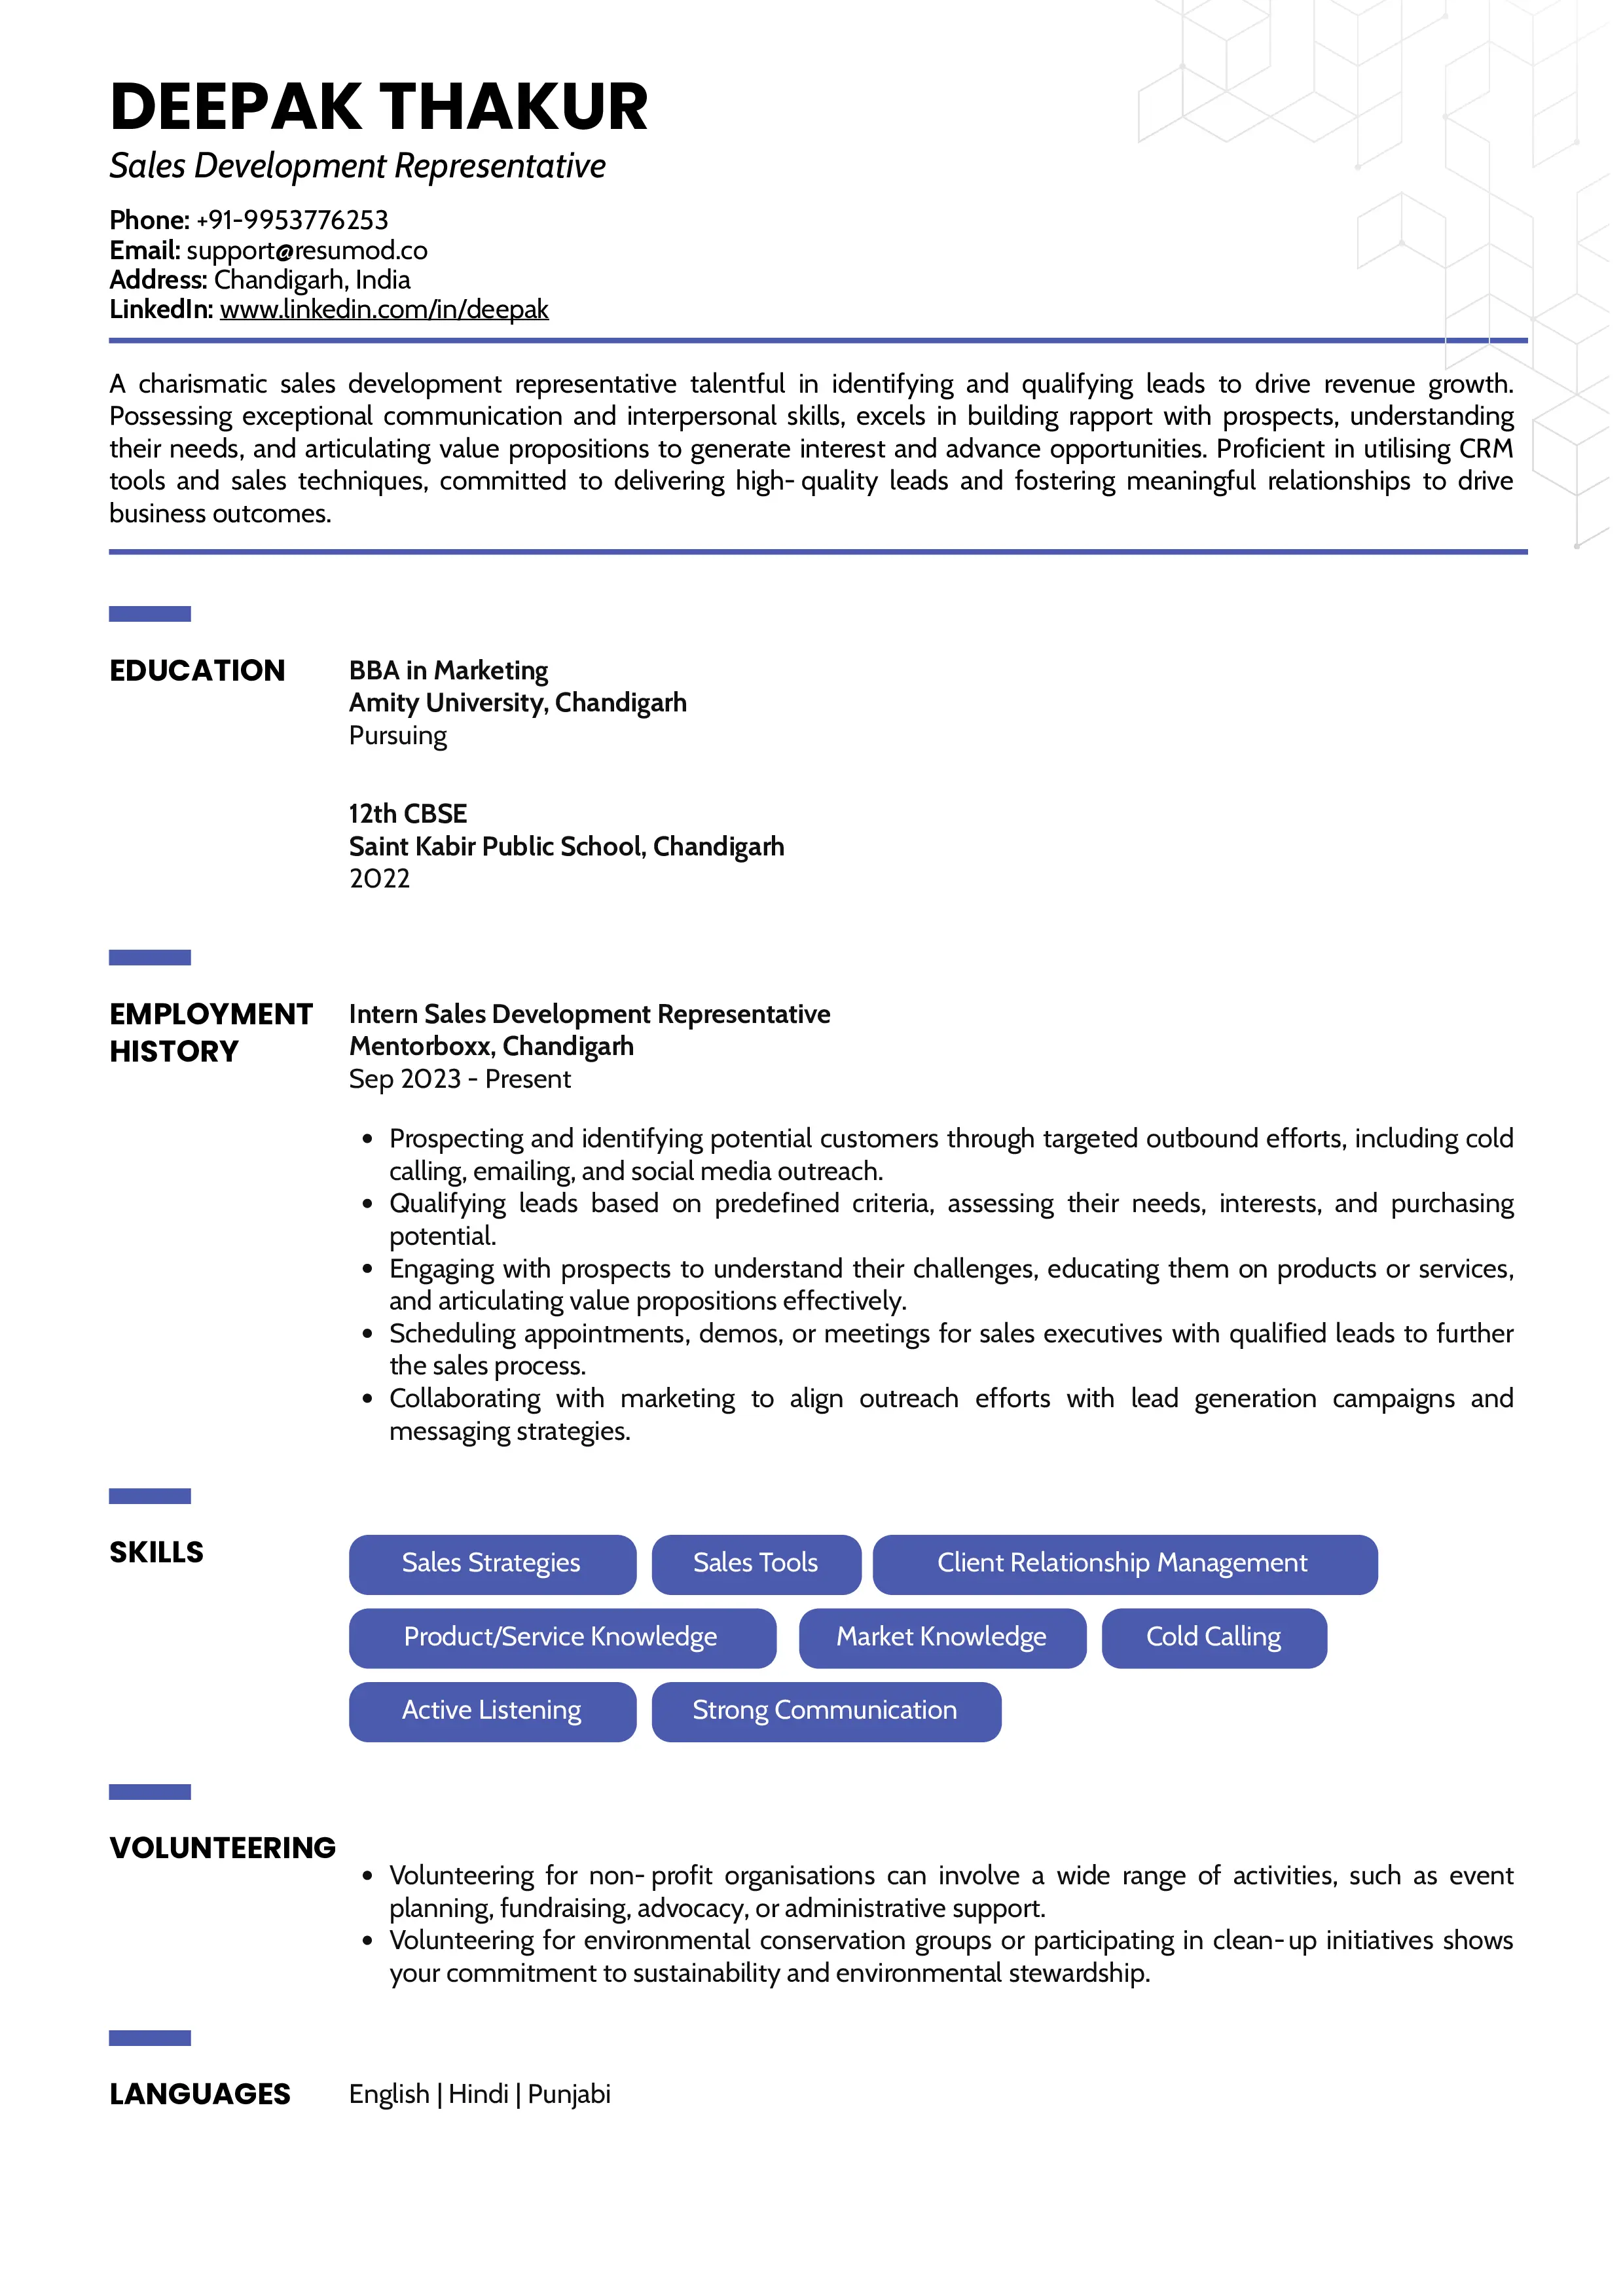 Sample Resume of Sales Development Representative | Free Resume Templates & Samples on Resumod.co